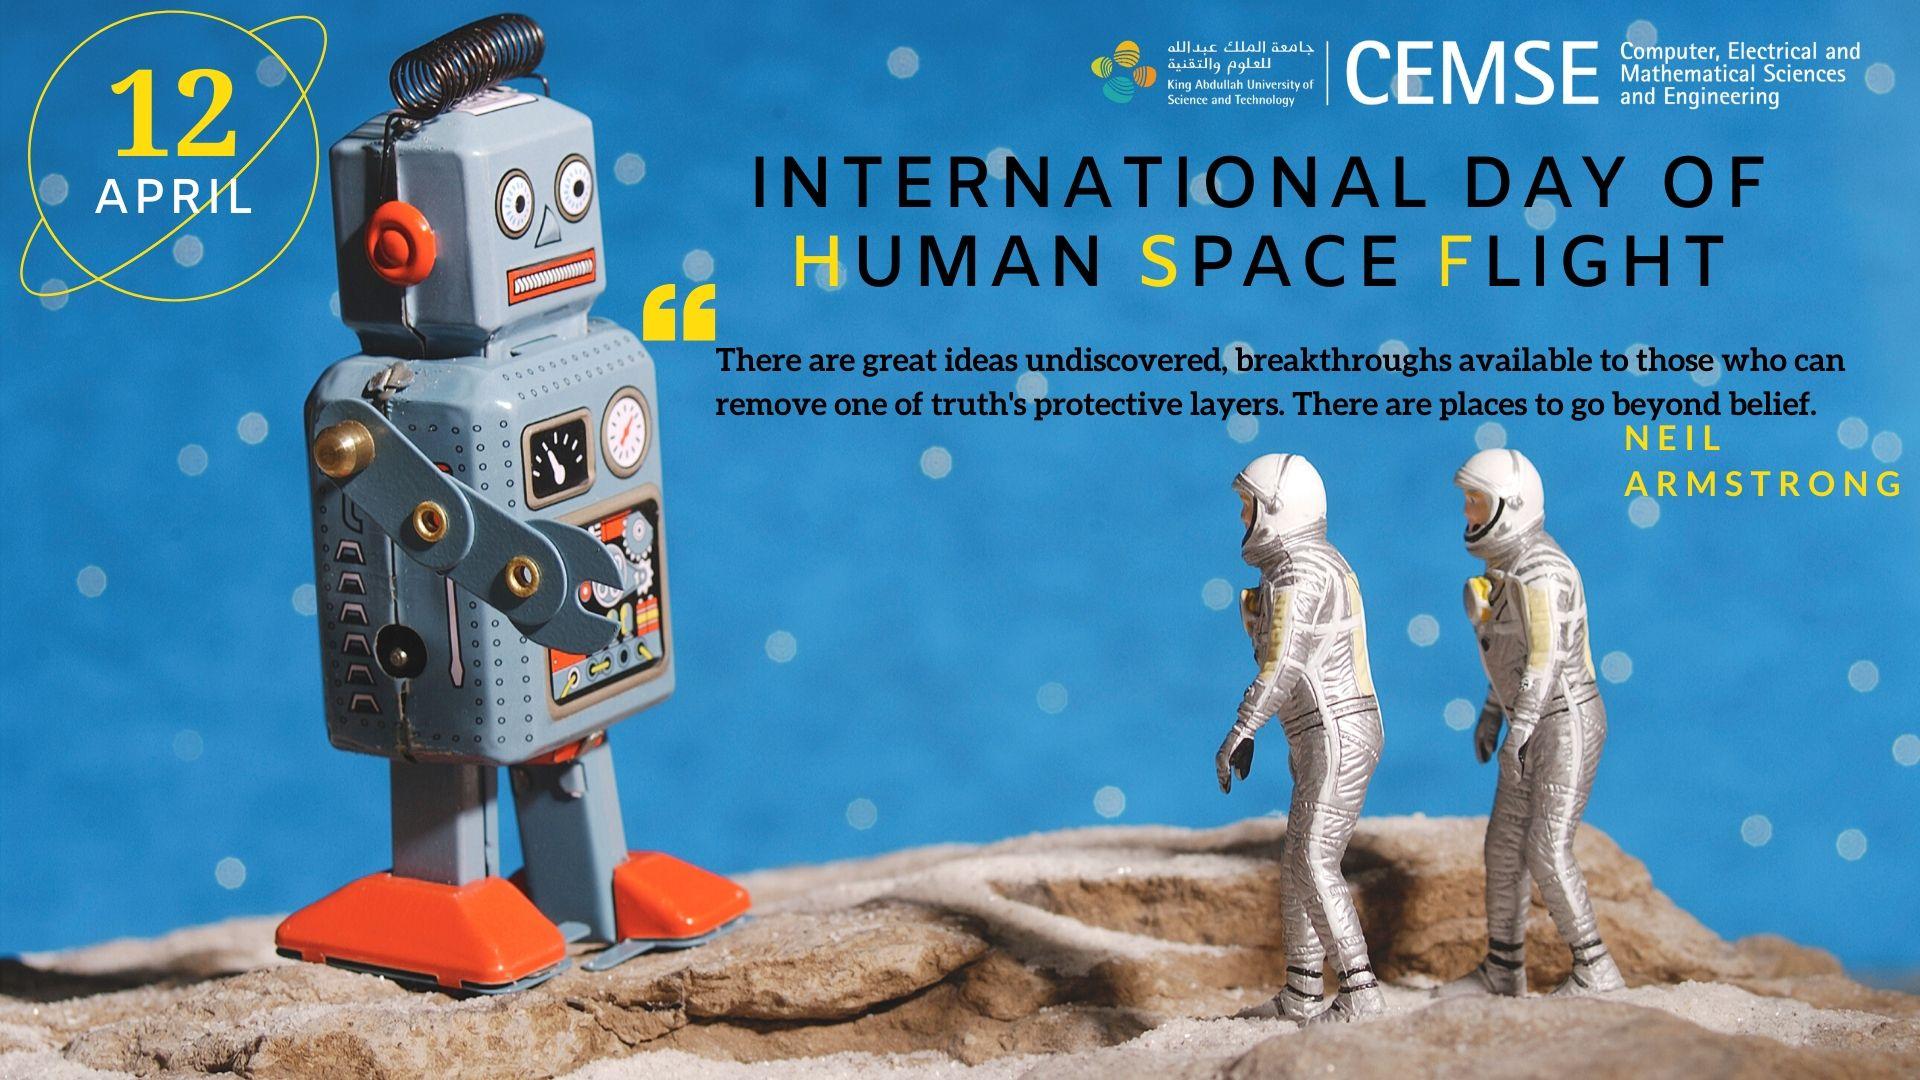 KAUST CEMSE International Day of Human Space Flight